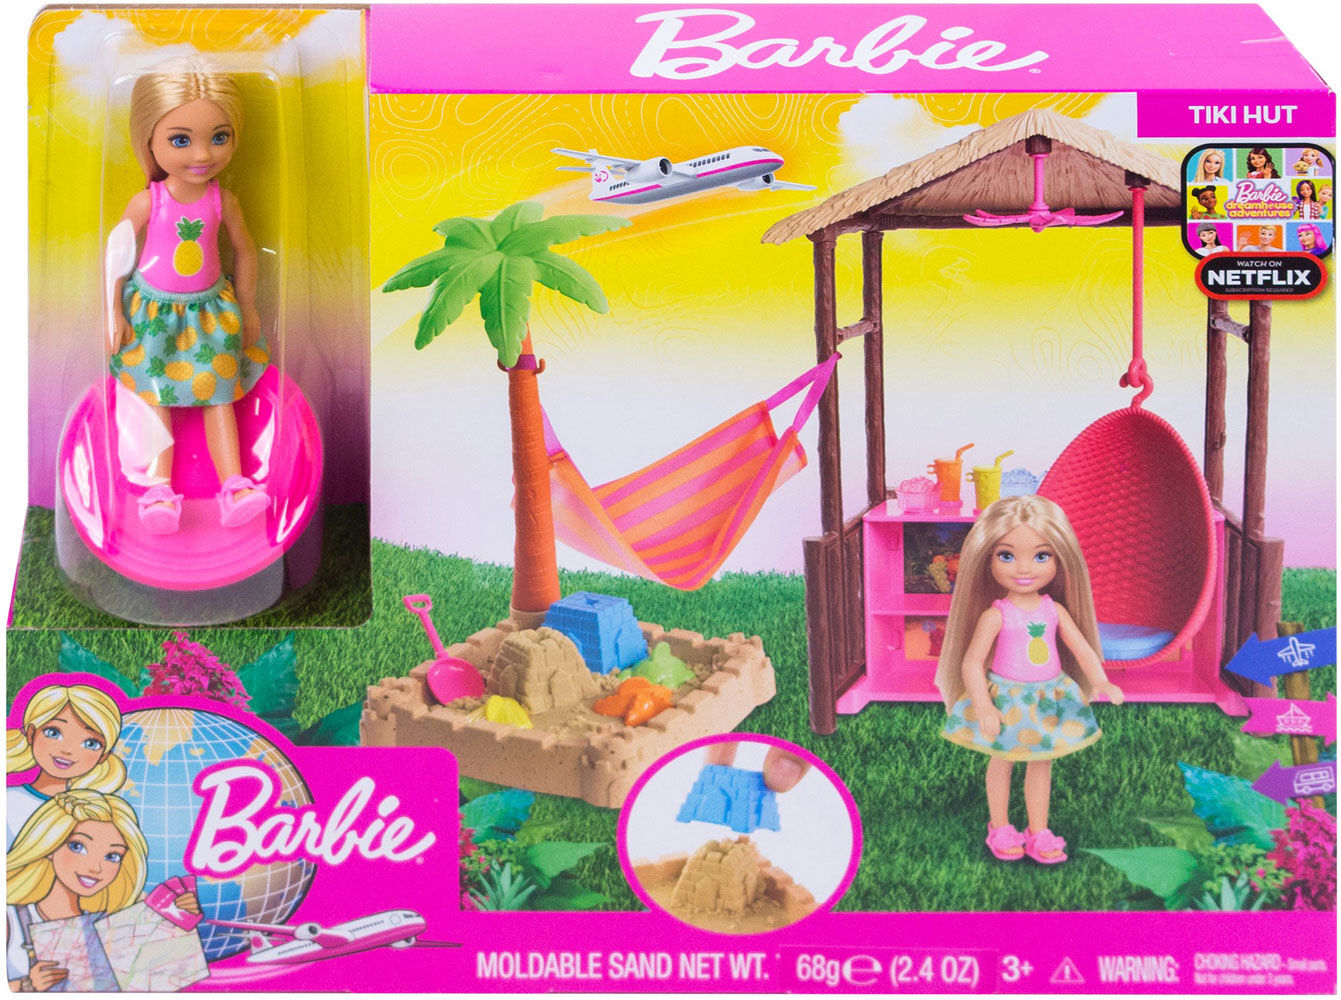 barbie coffret voyage